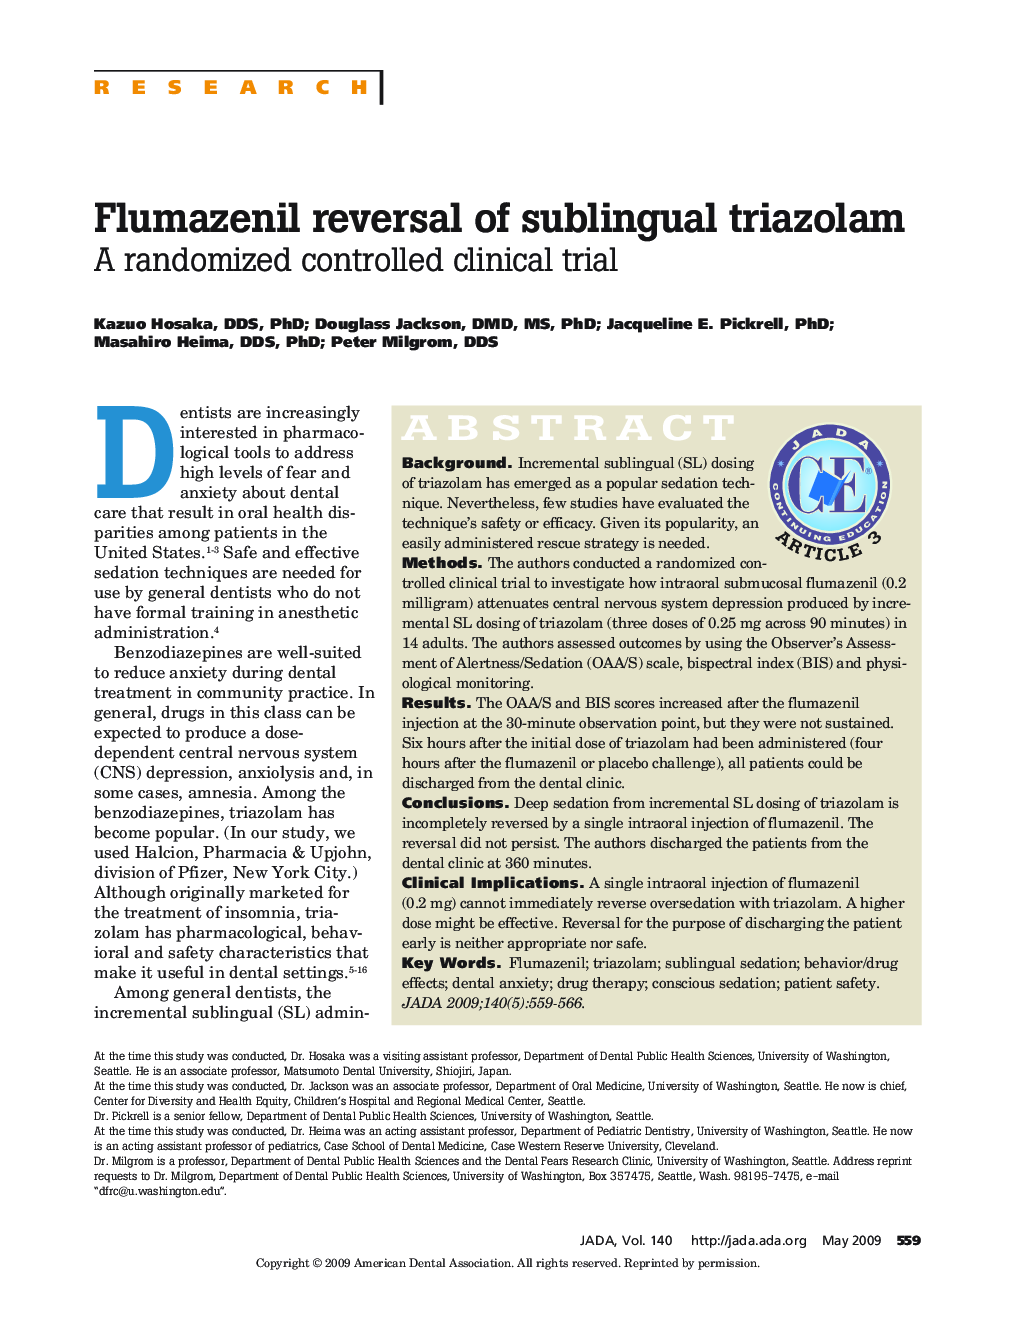 Flumazenil Reversal of Sublingual Triazolam : A Randomized Controlled Clinical Trial